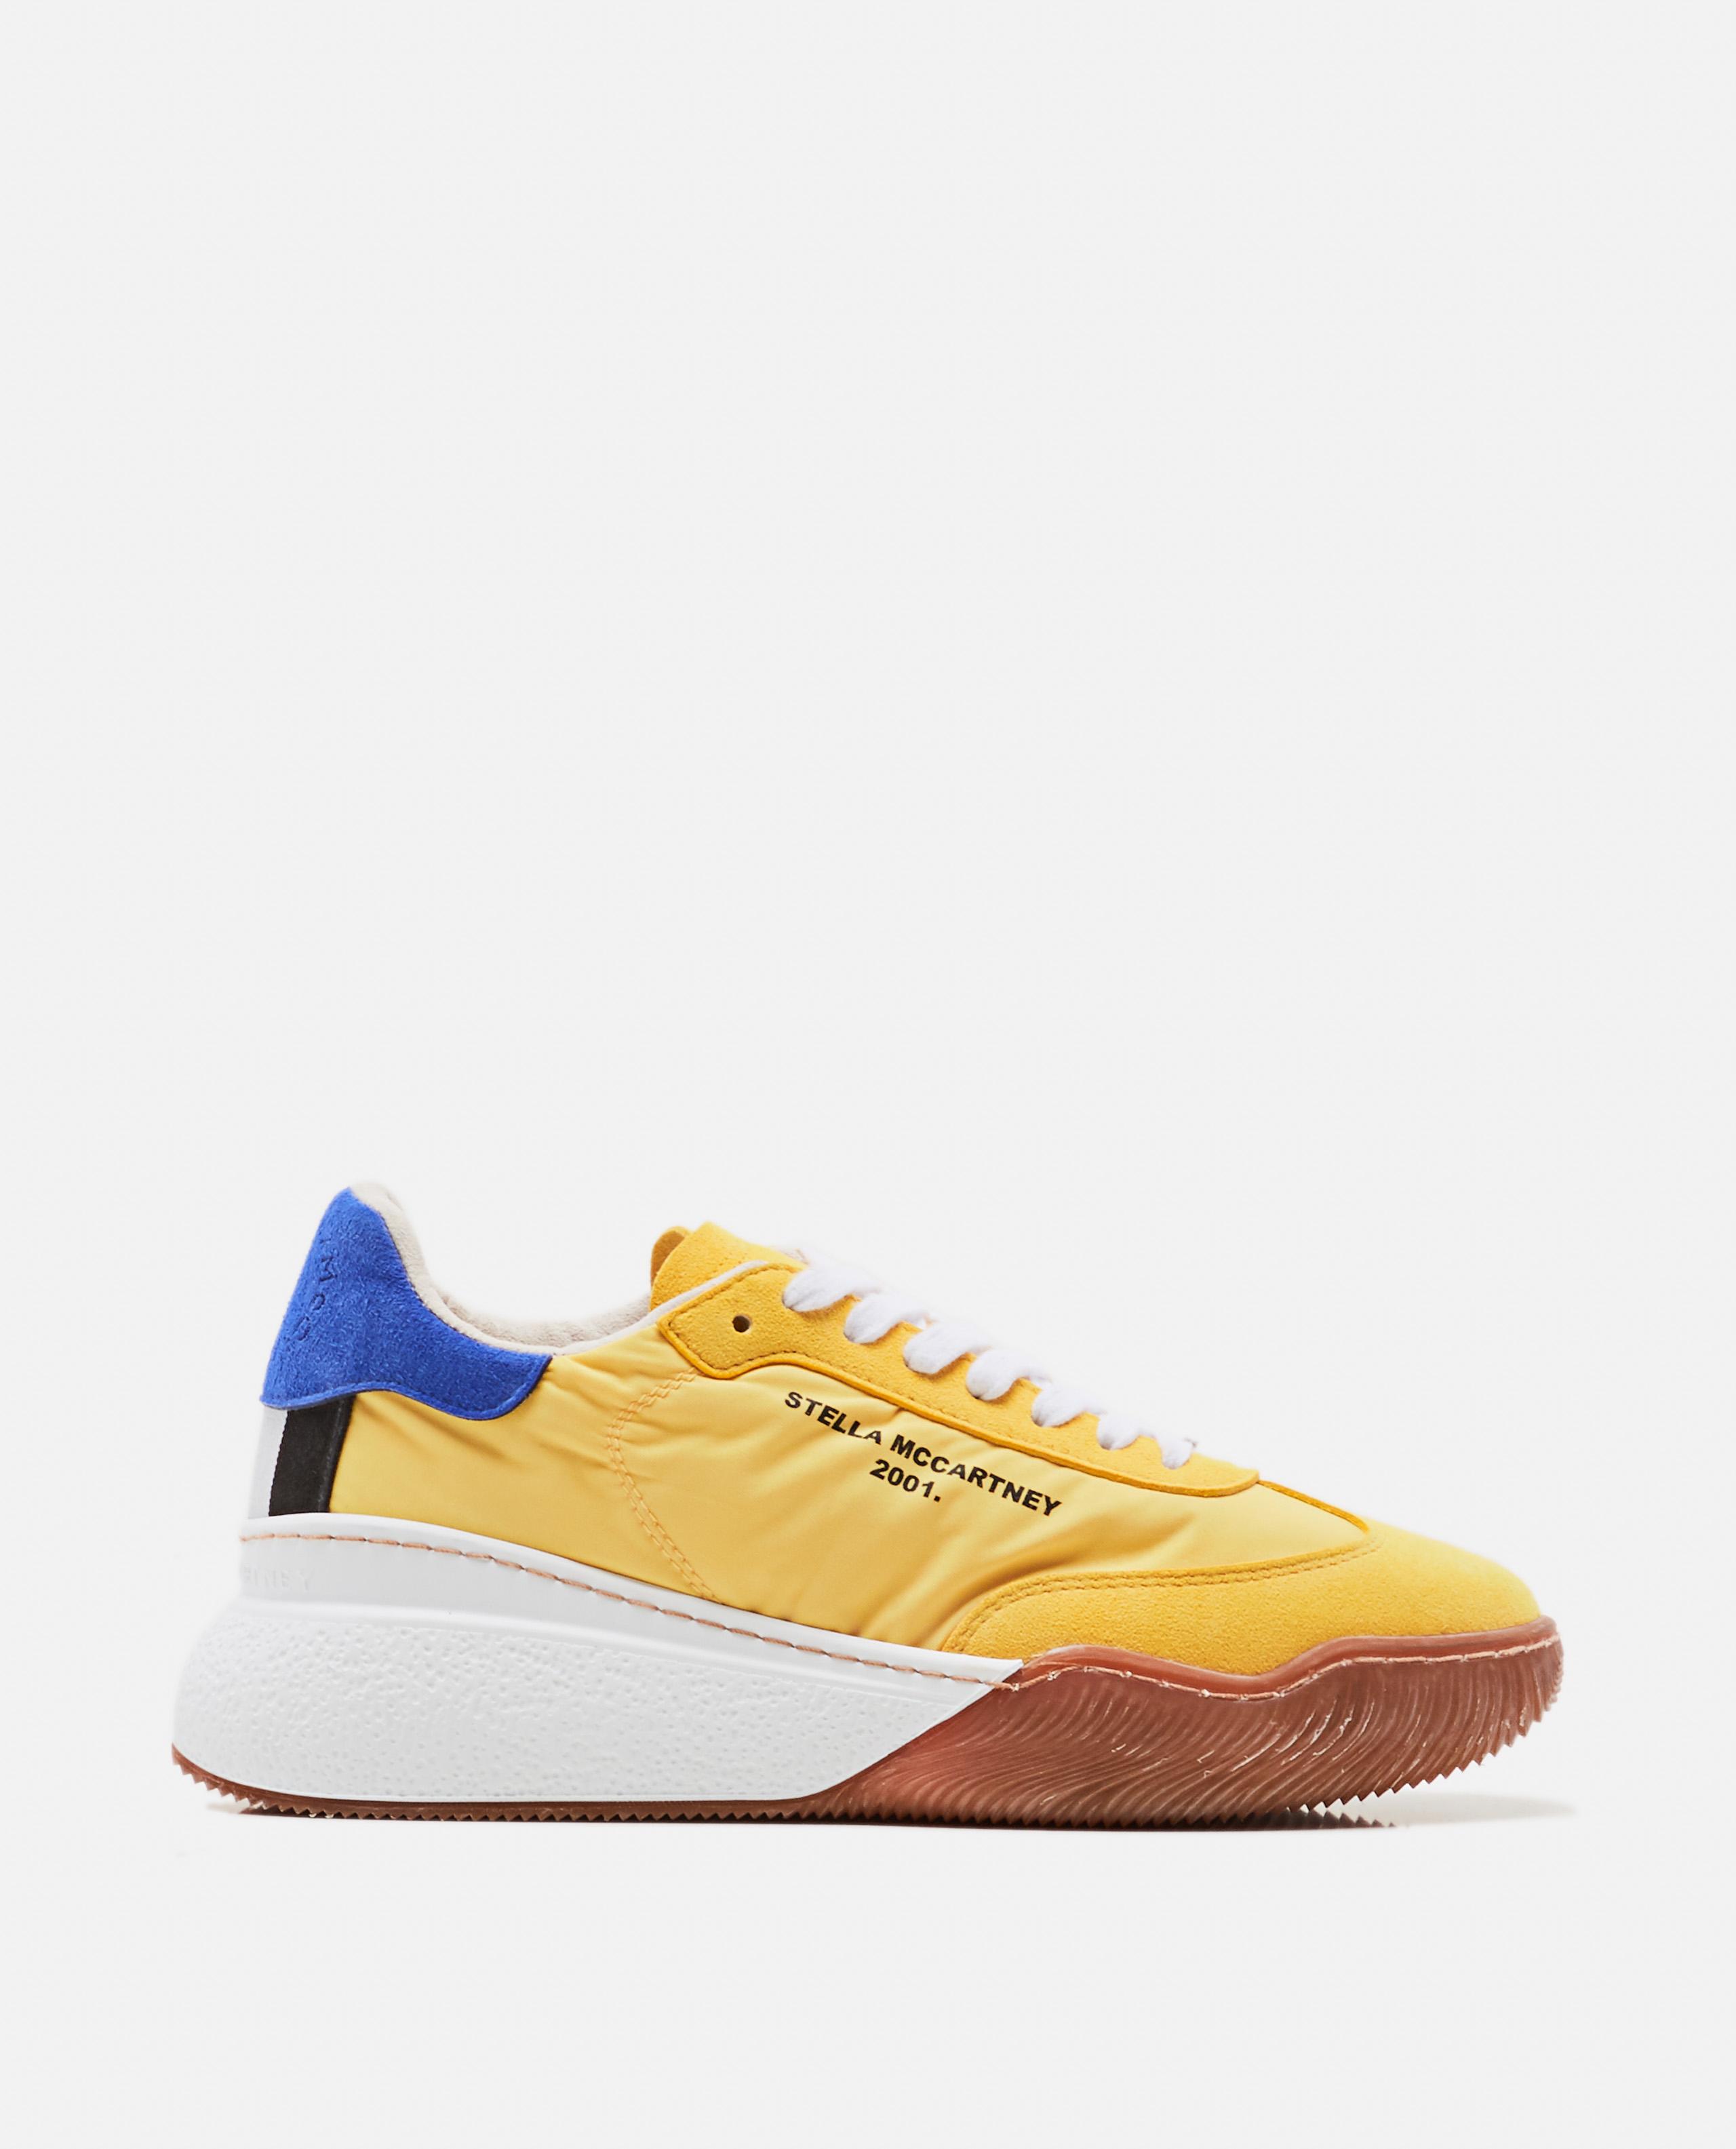 stella mccartney yellow sneakers